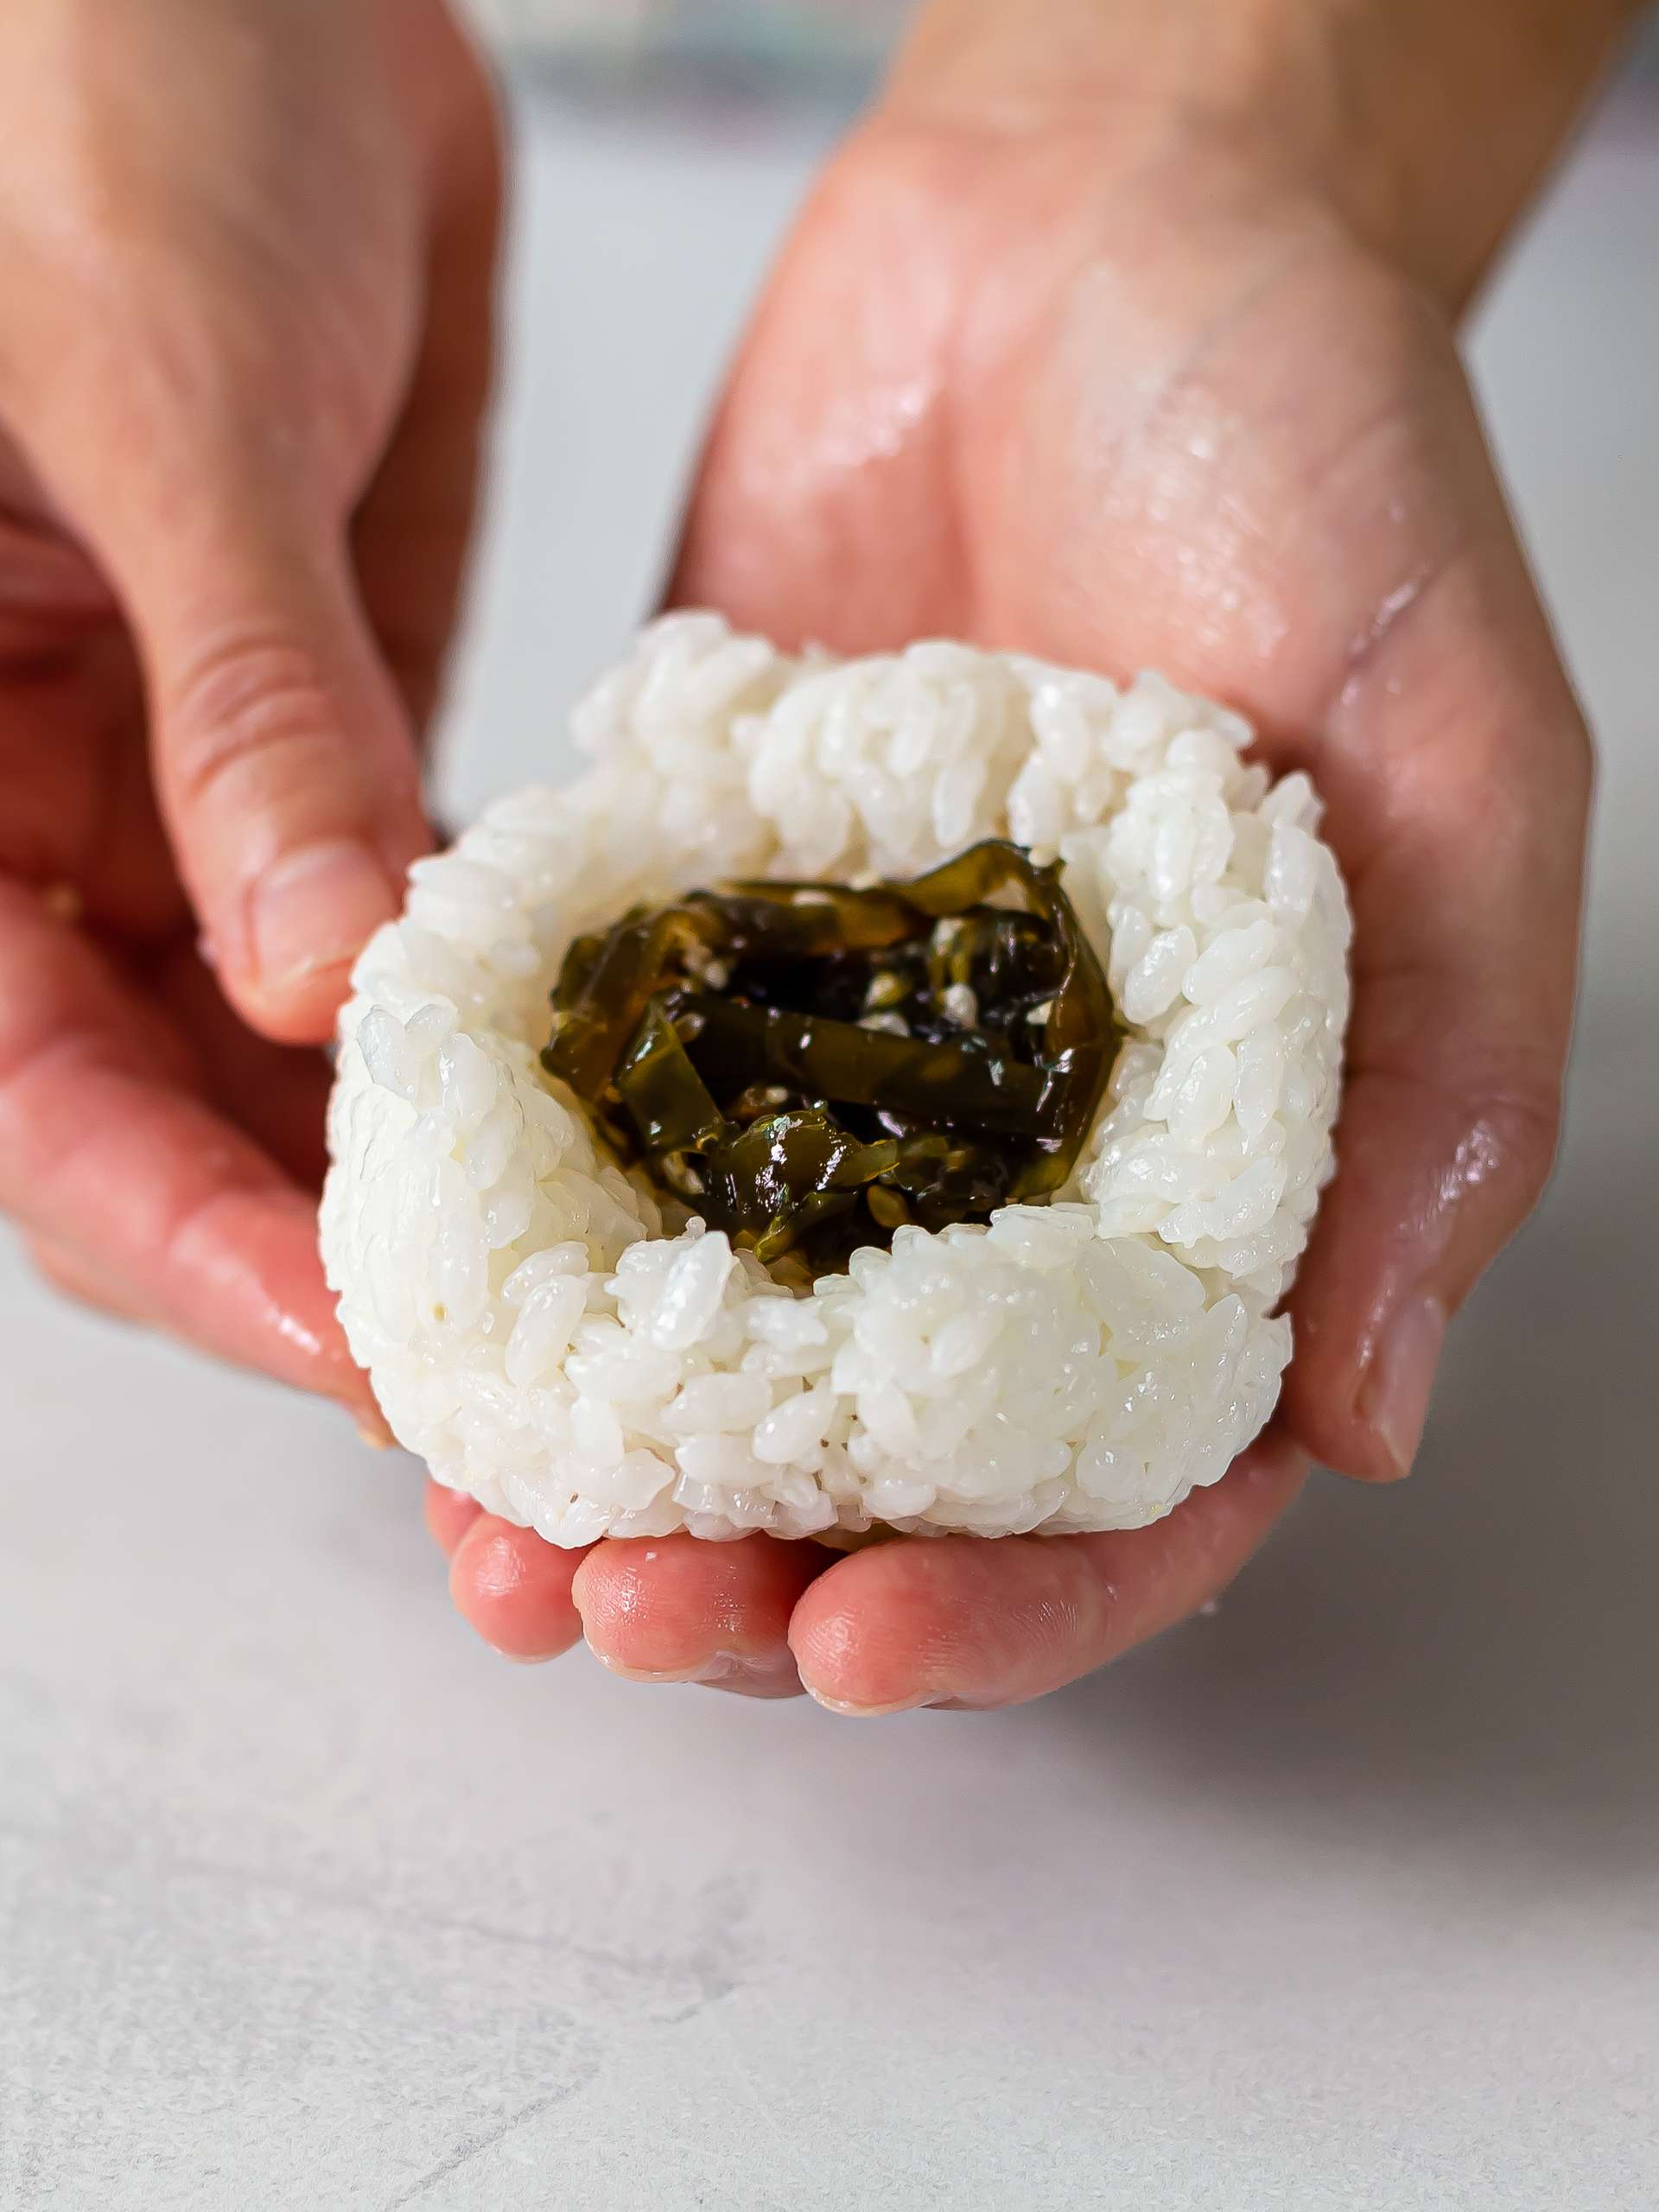 onigiri rice filled with kombu